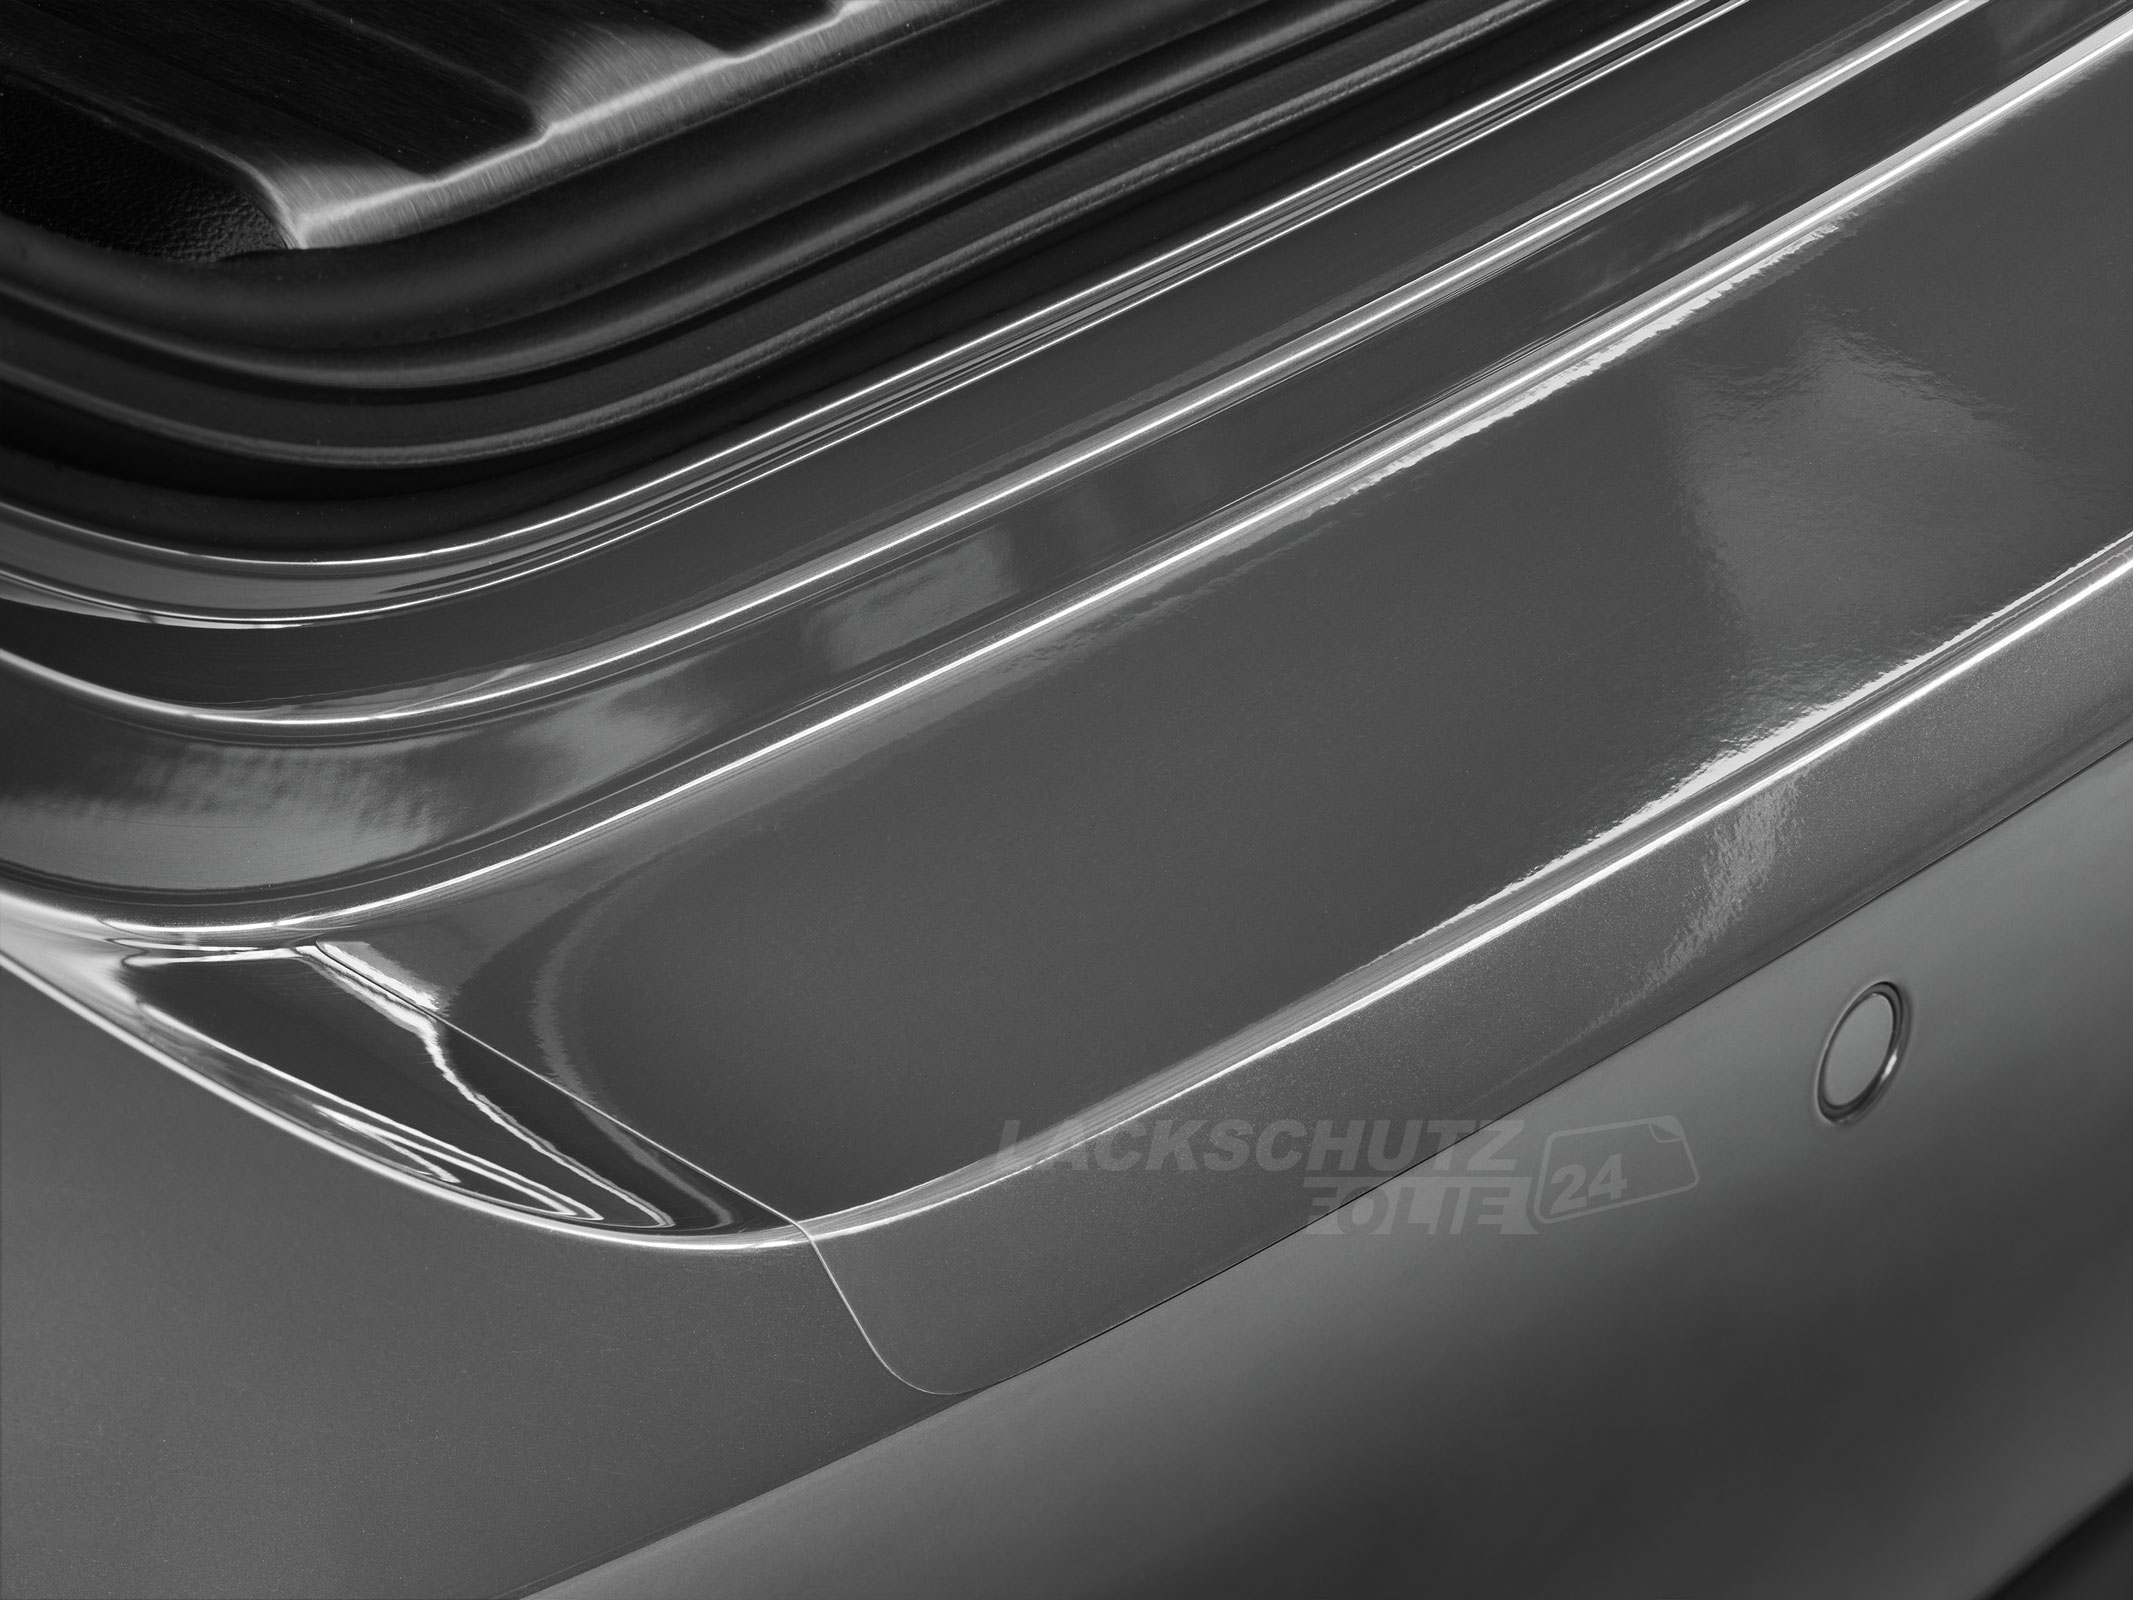 Ladekantenschutzfolie - Transparent Glatt Hochglänzend 150 µm stark für Audi Q5 (I) Typ 8R, BJ 08/2008 - 12/2016